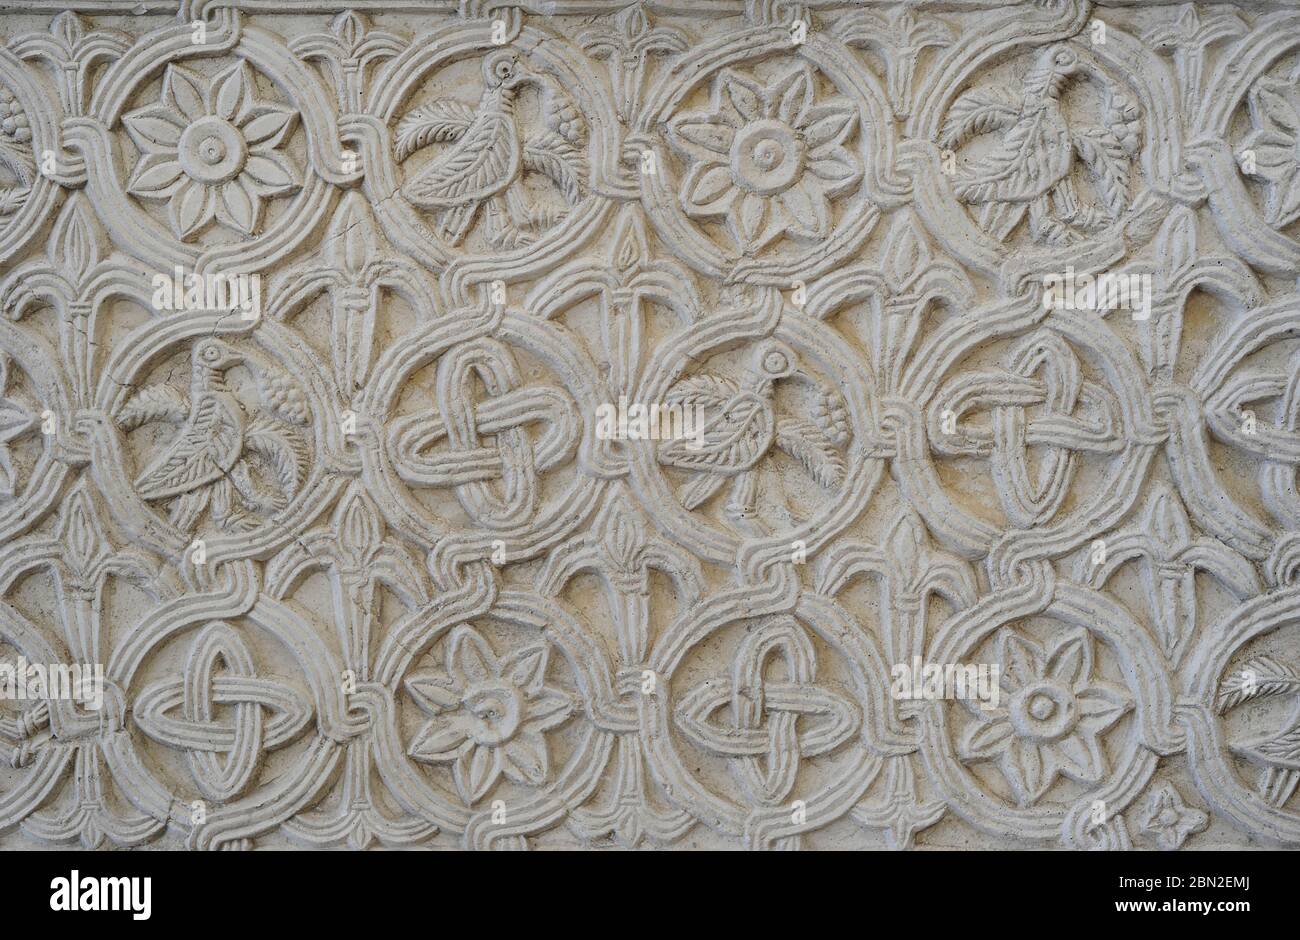 Altar screen from Koljane, near Vrlika. 9th century. Detail of decorative reliefs. Croatia. Stock Photo